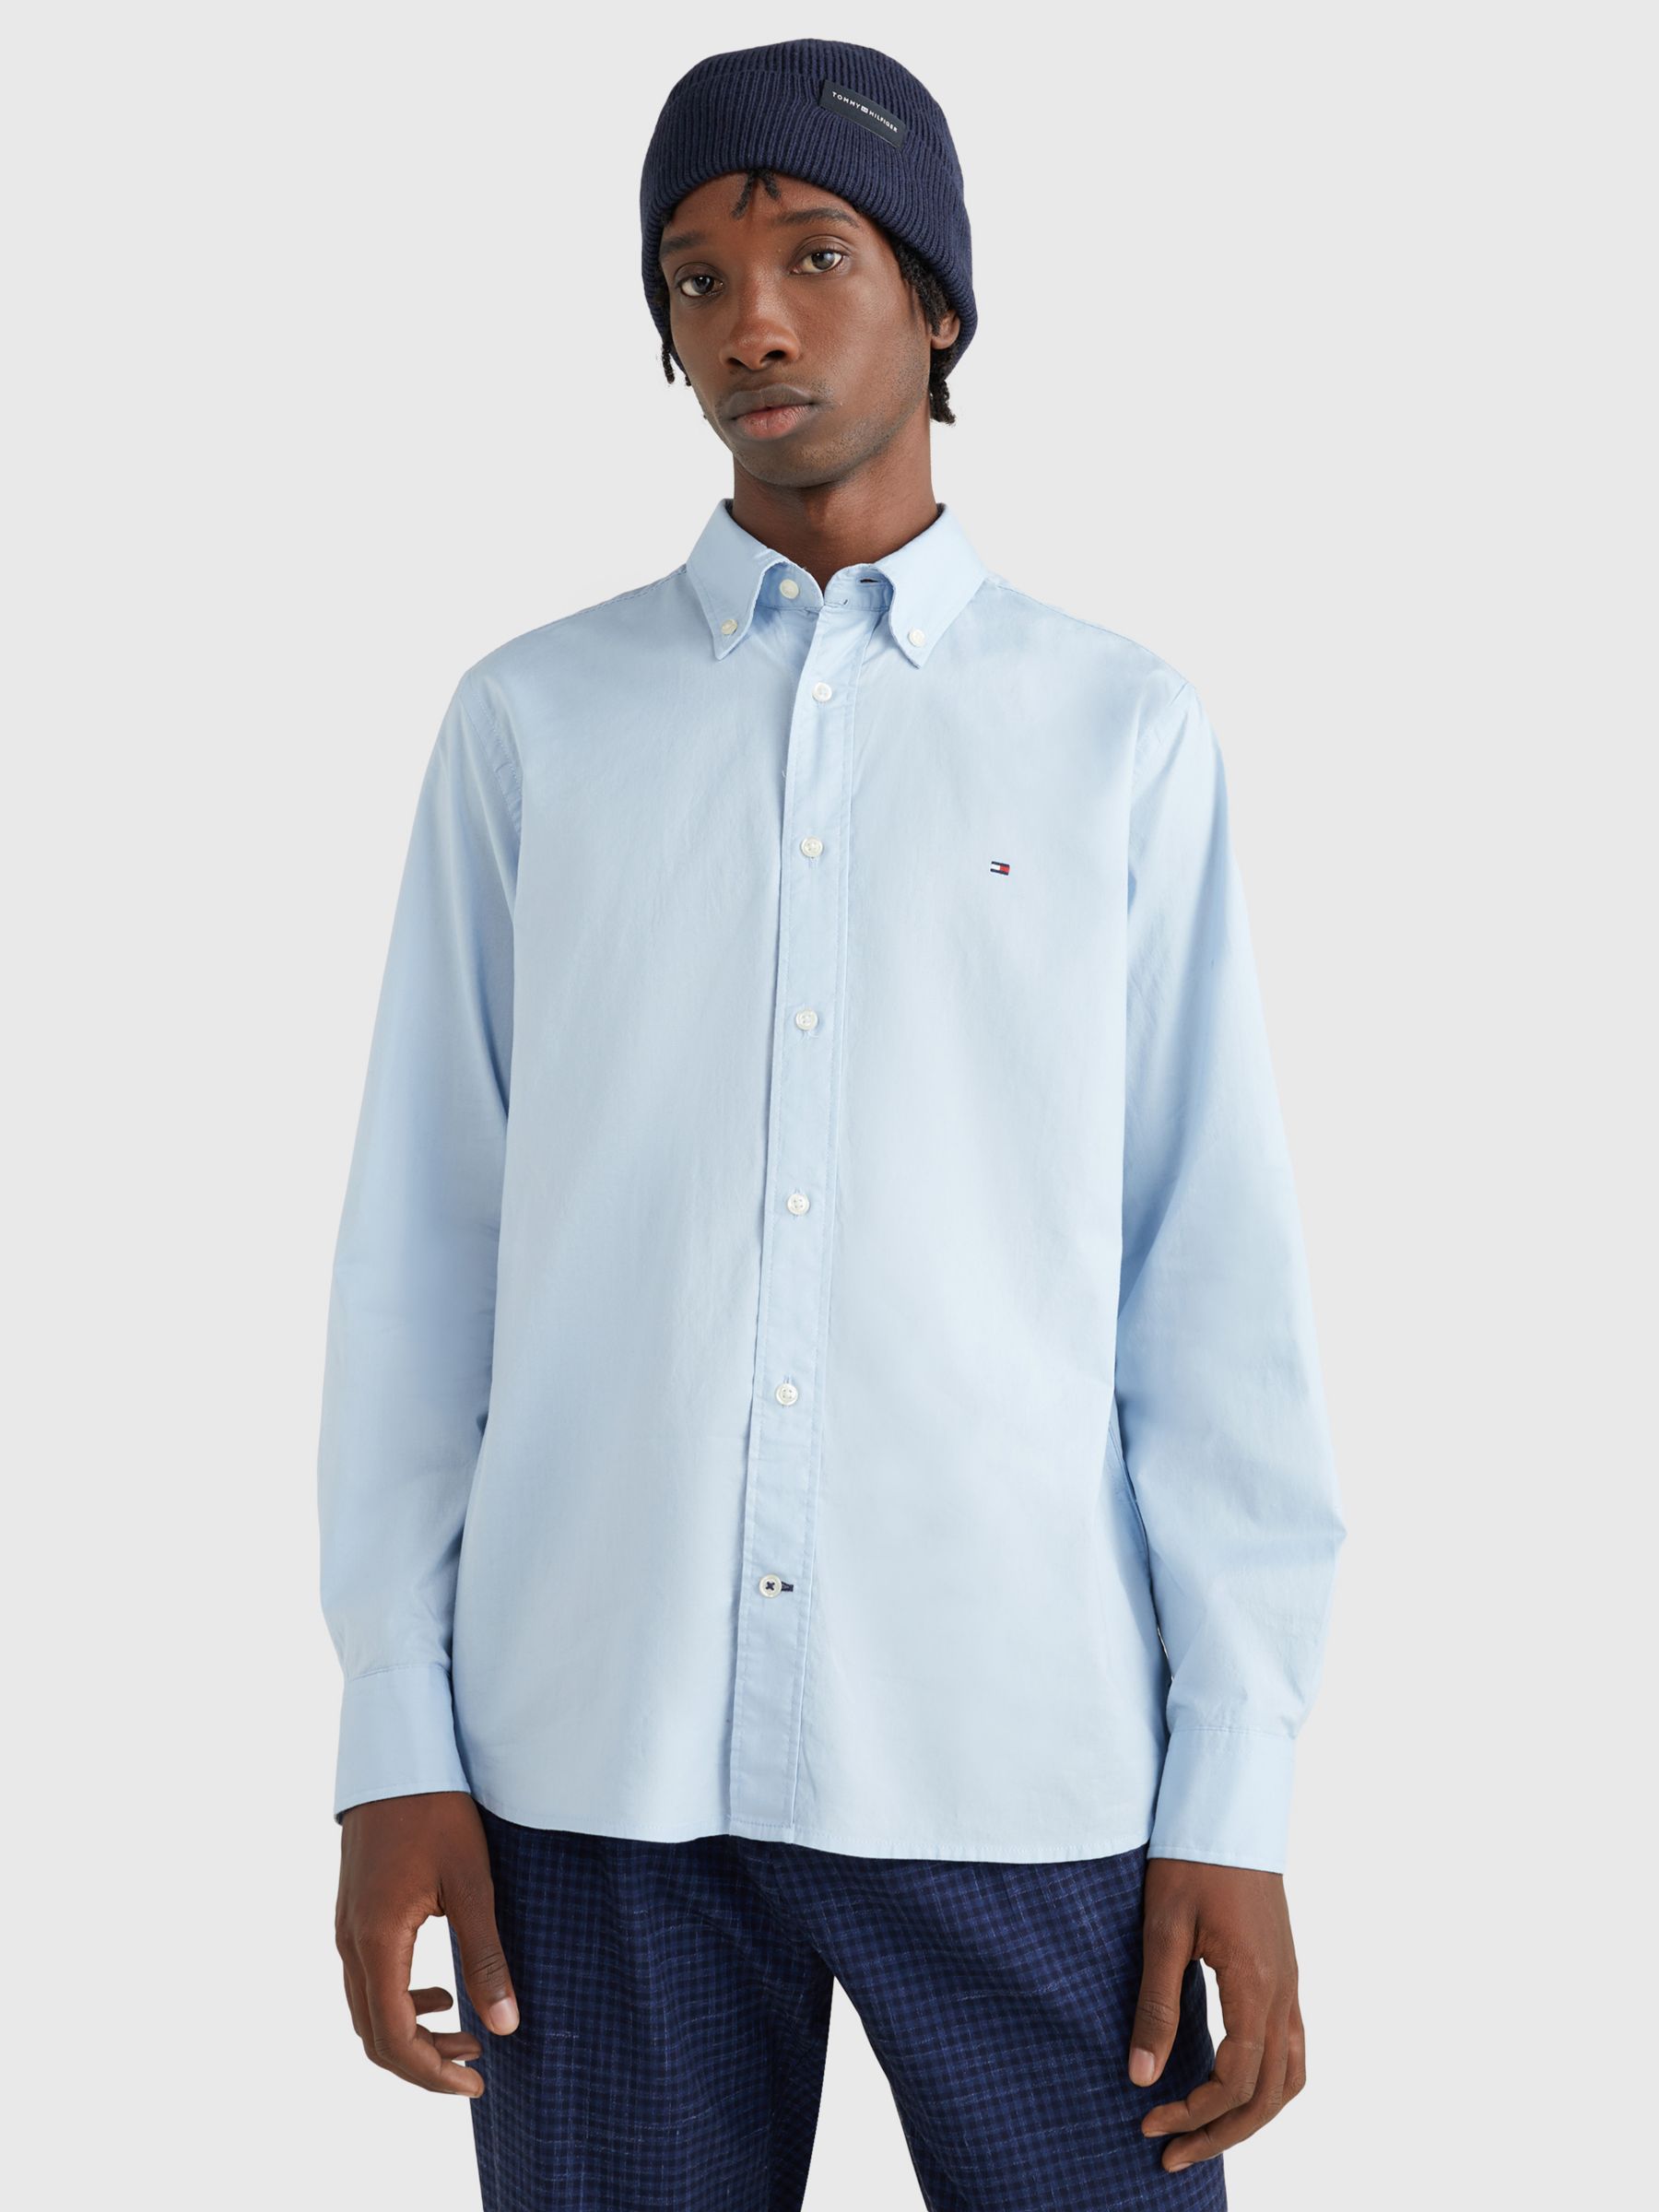 Tommy Hilfiger Core Flex Poplin Regular Fit Shirt, Calm Blue at